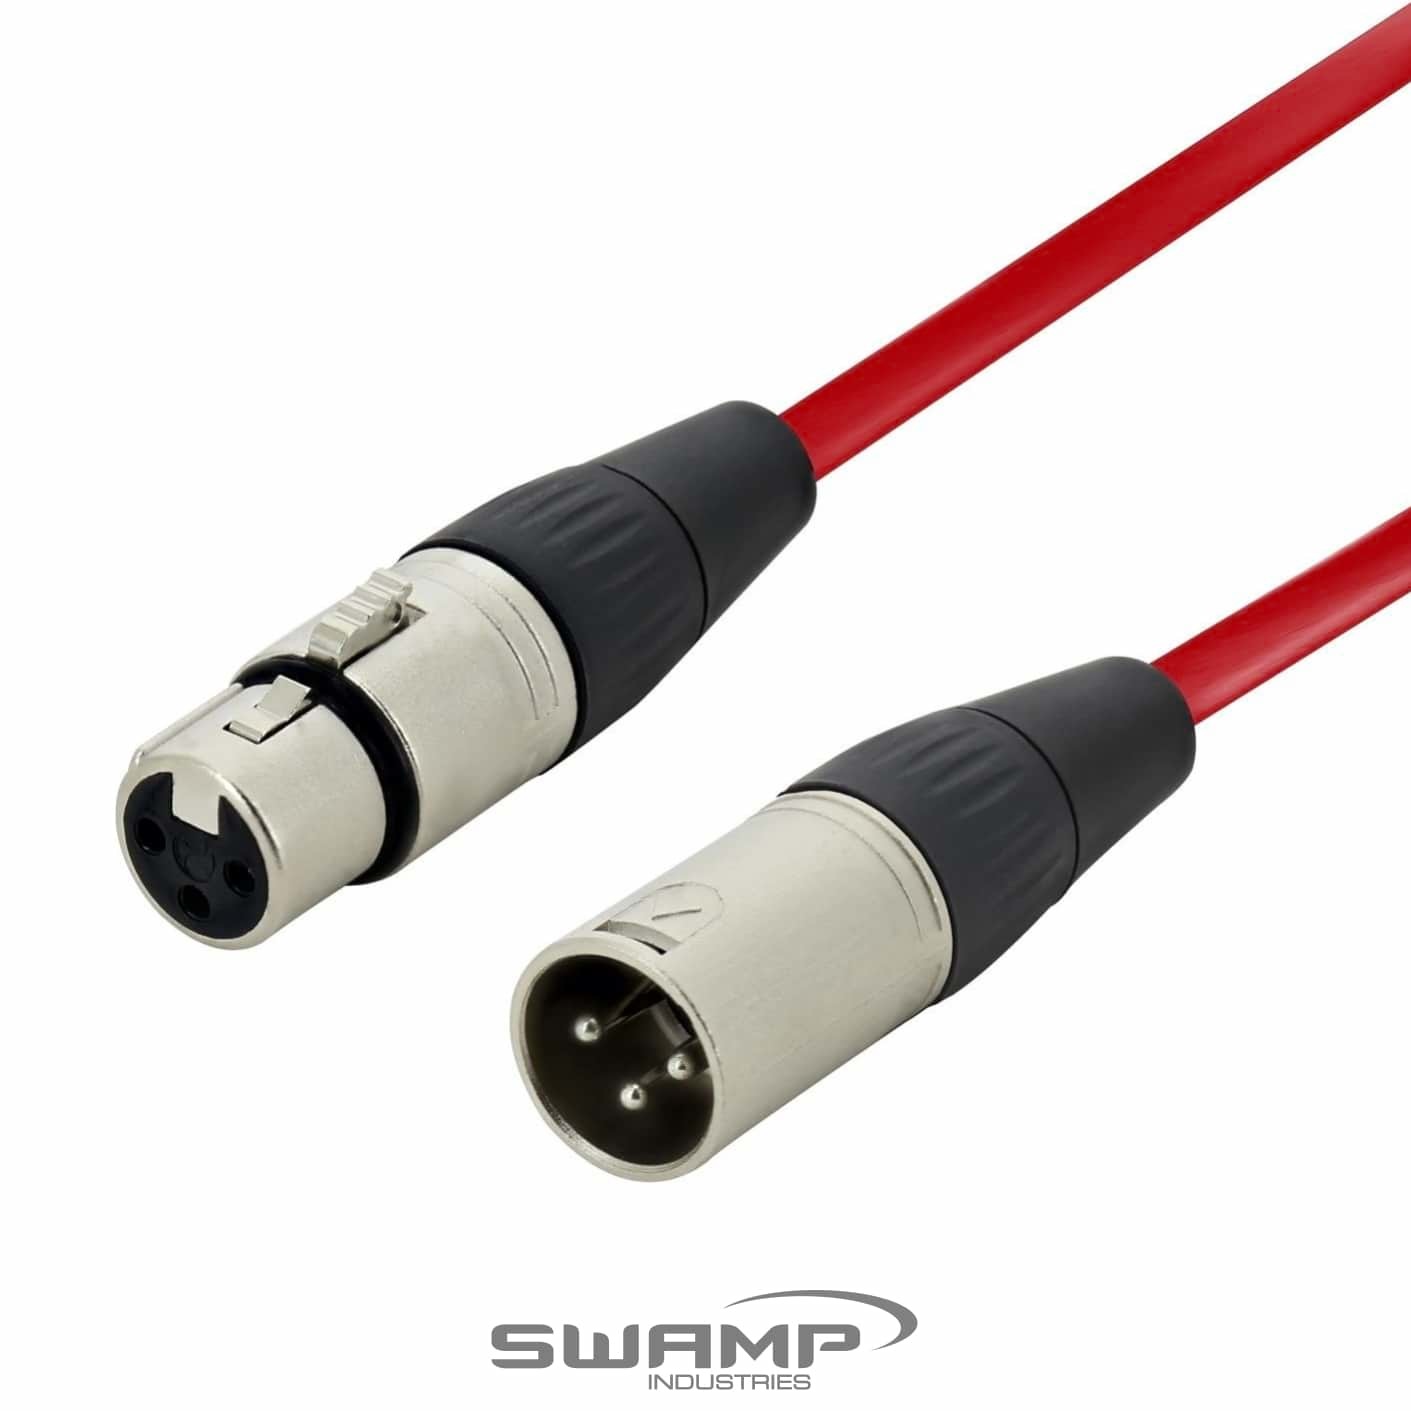 Cable Techniques Lo-Pro Connector Cap for Right Angle Low-Profile XLR Connectors